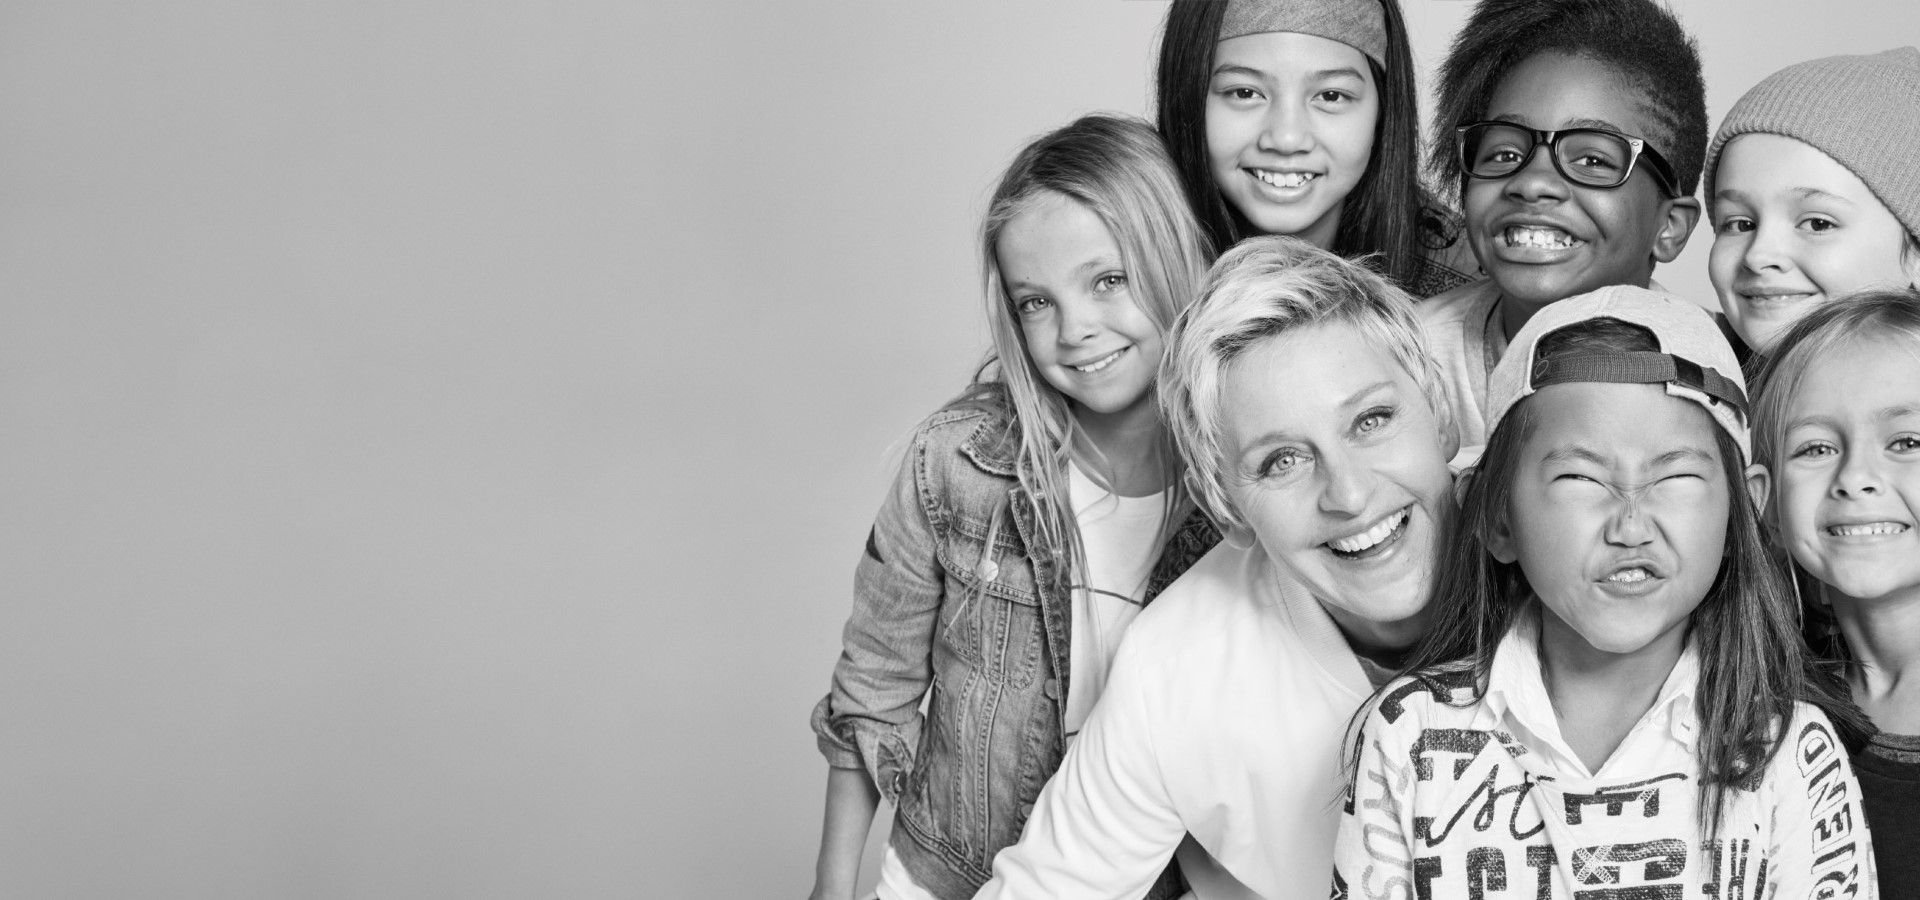 Gap Ellen DeGeneres: la collezione GapKids x ED, le foto della campagna